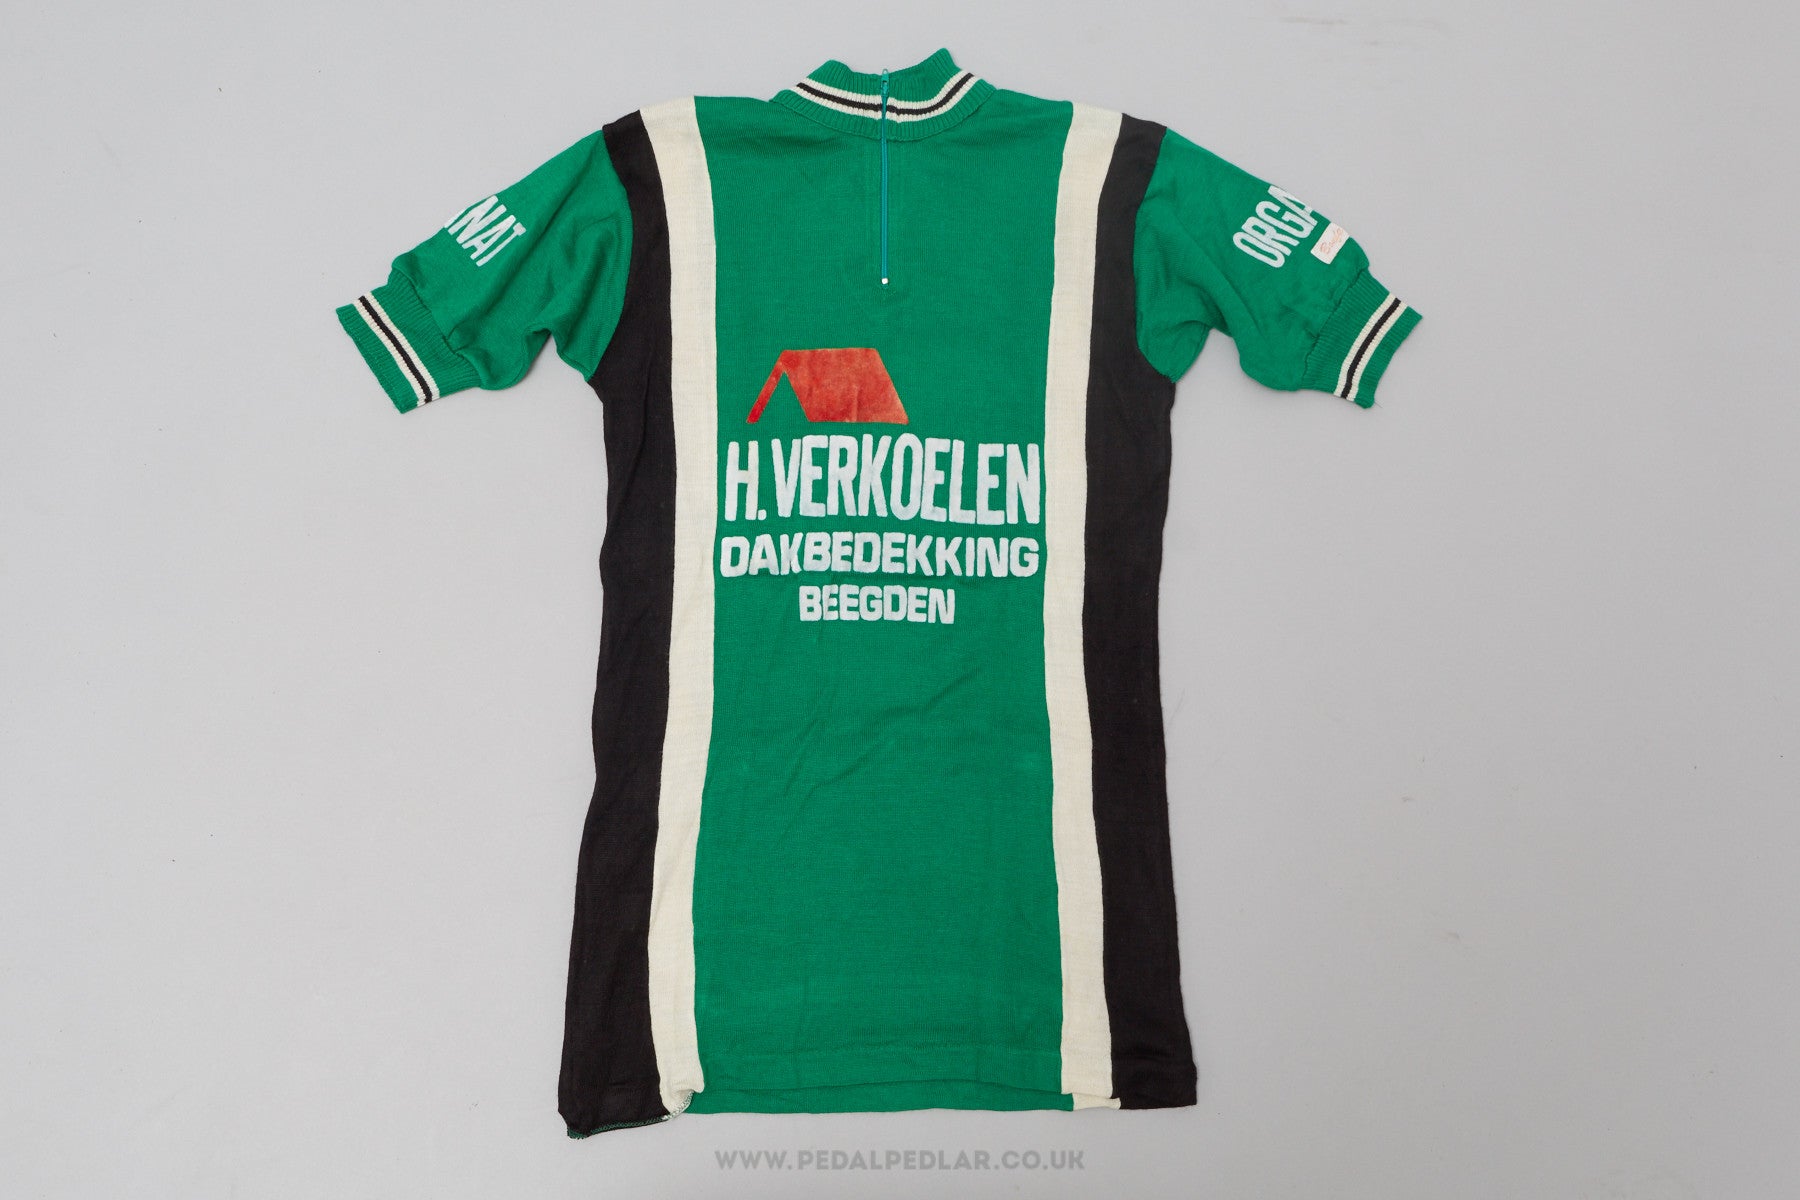 H. Verkoelen Dakbedekking Beegden	- Vintage	Woollen Style	Cycling Jersey - Pedal Pedlar
 - 1